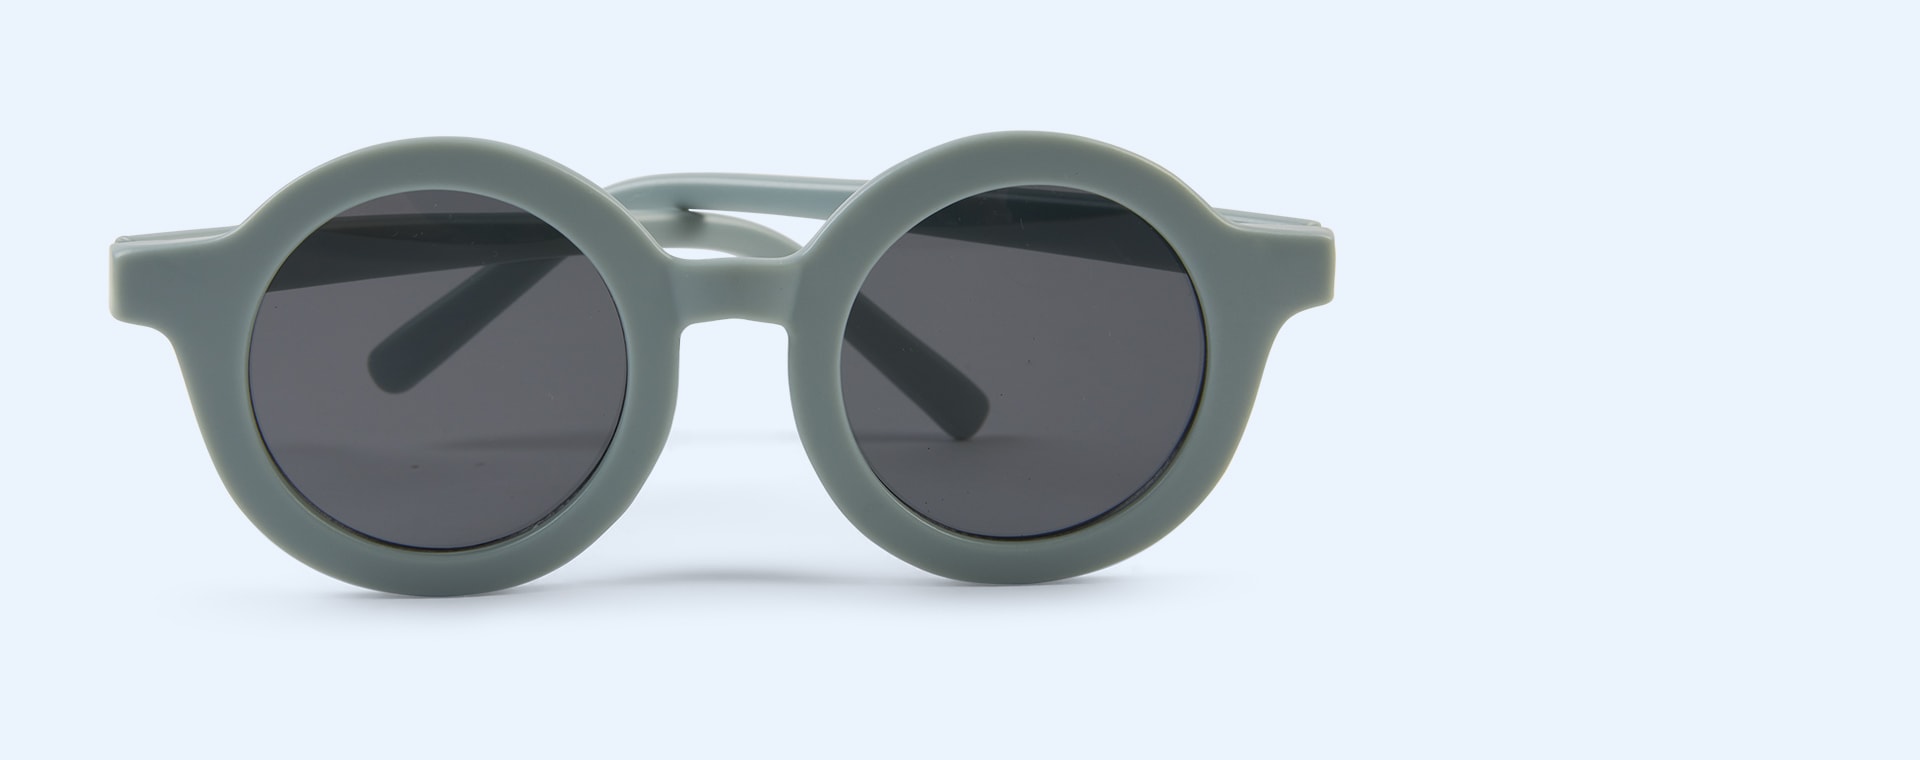 Light Blue Grech & Co Sustainable Sunglasses